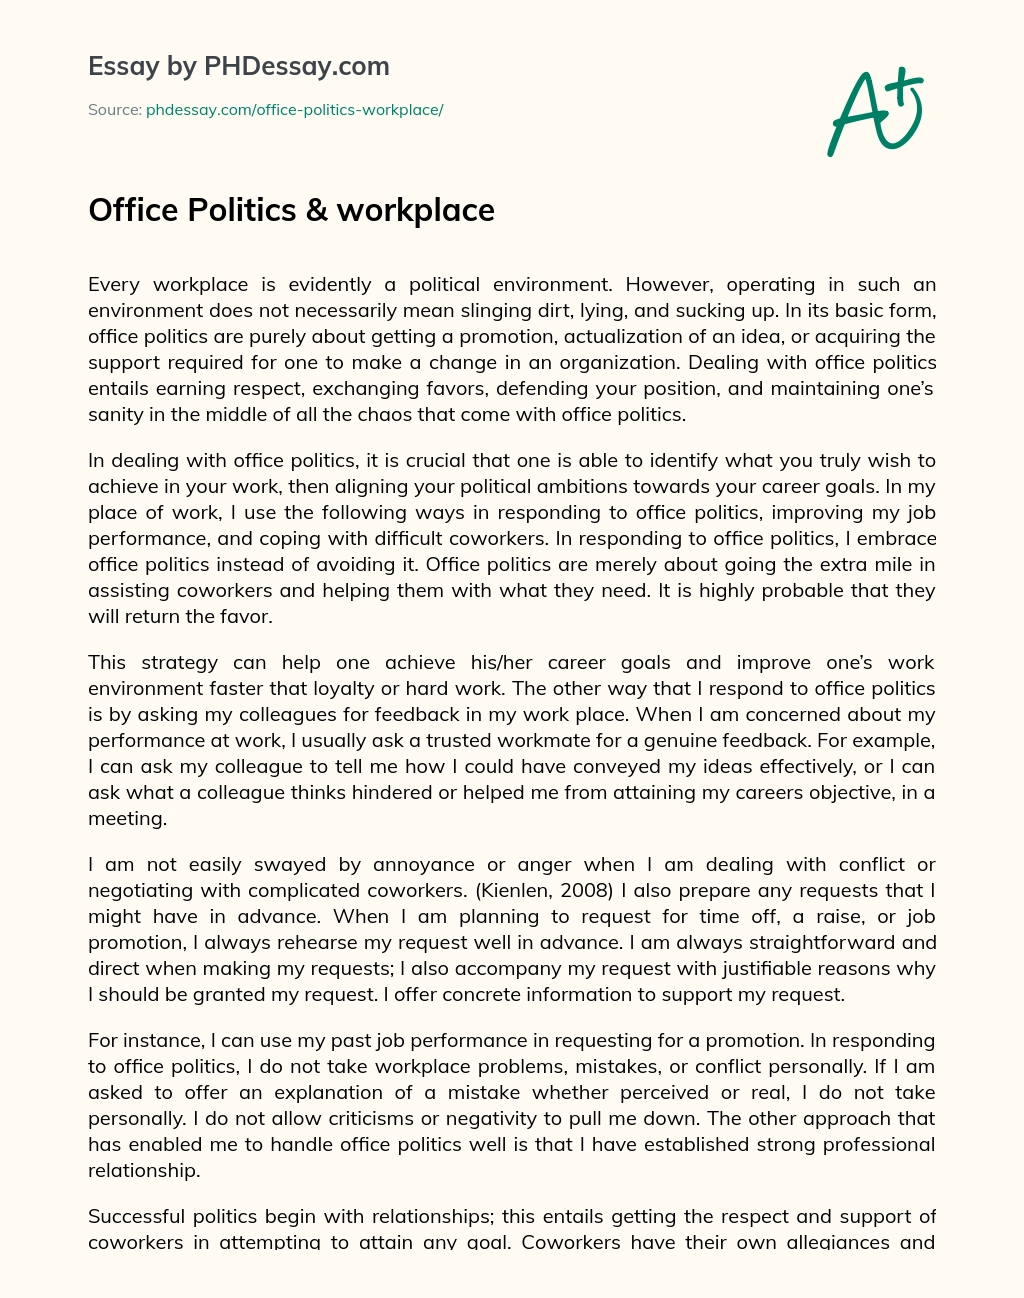 Office Politics & workplace essay